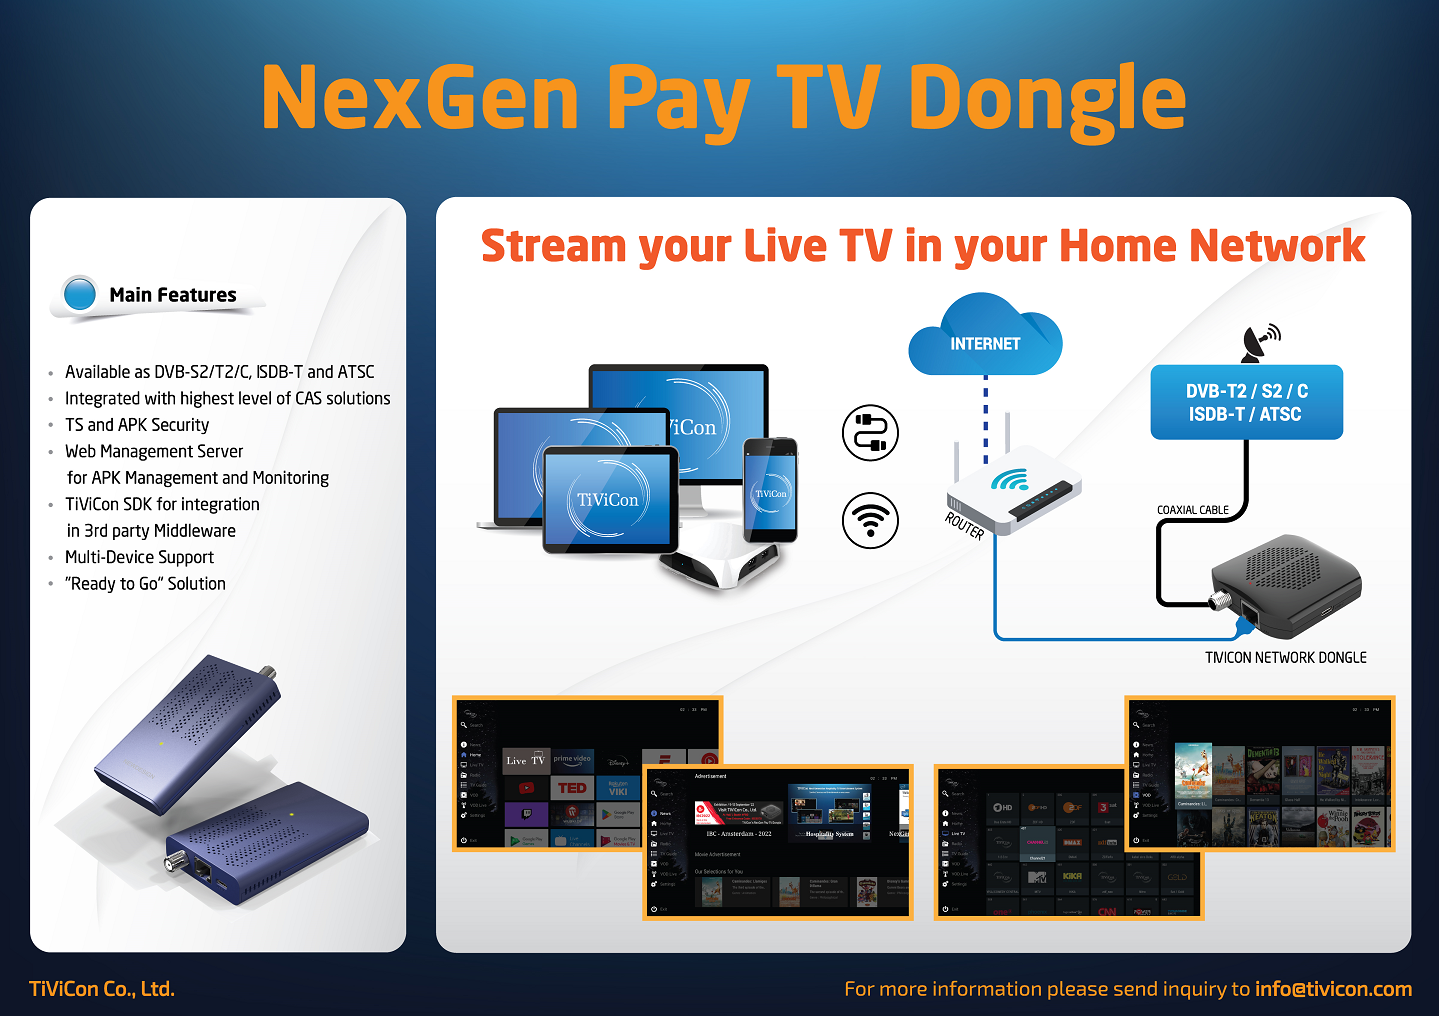 NexGen Pay TV Dongle